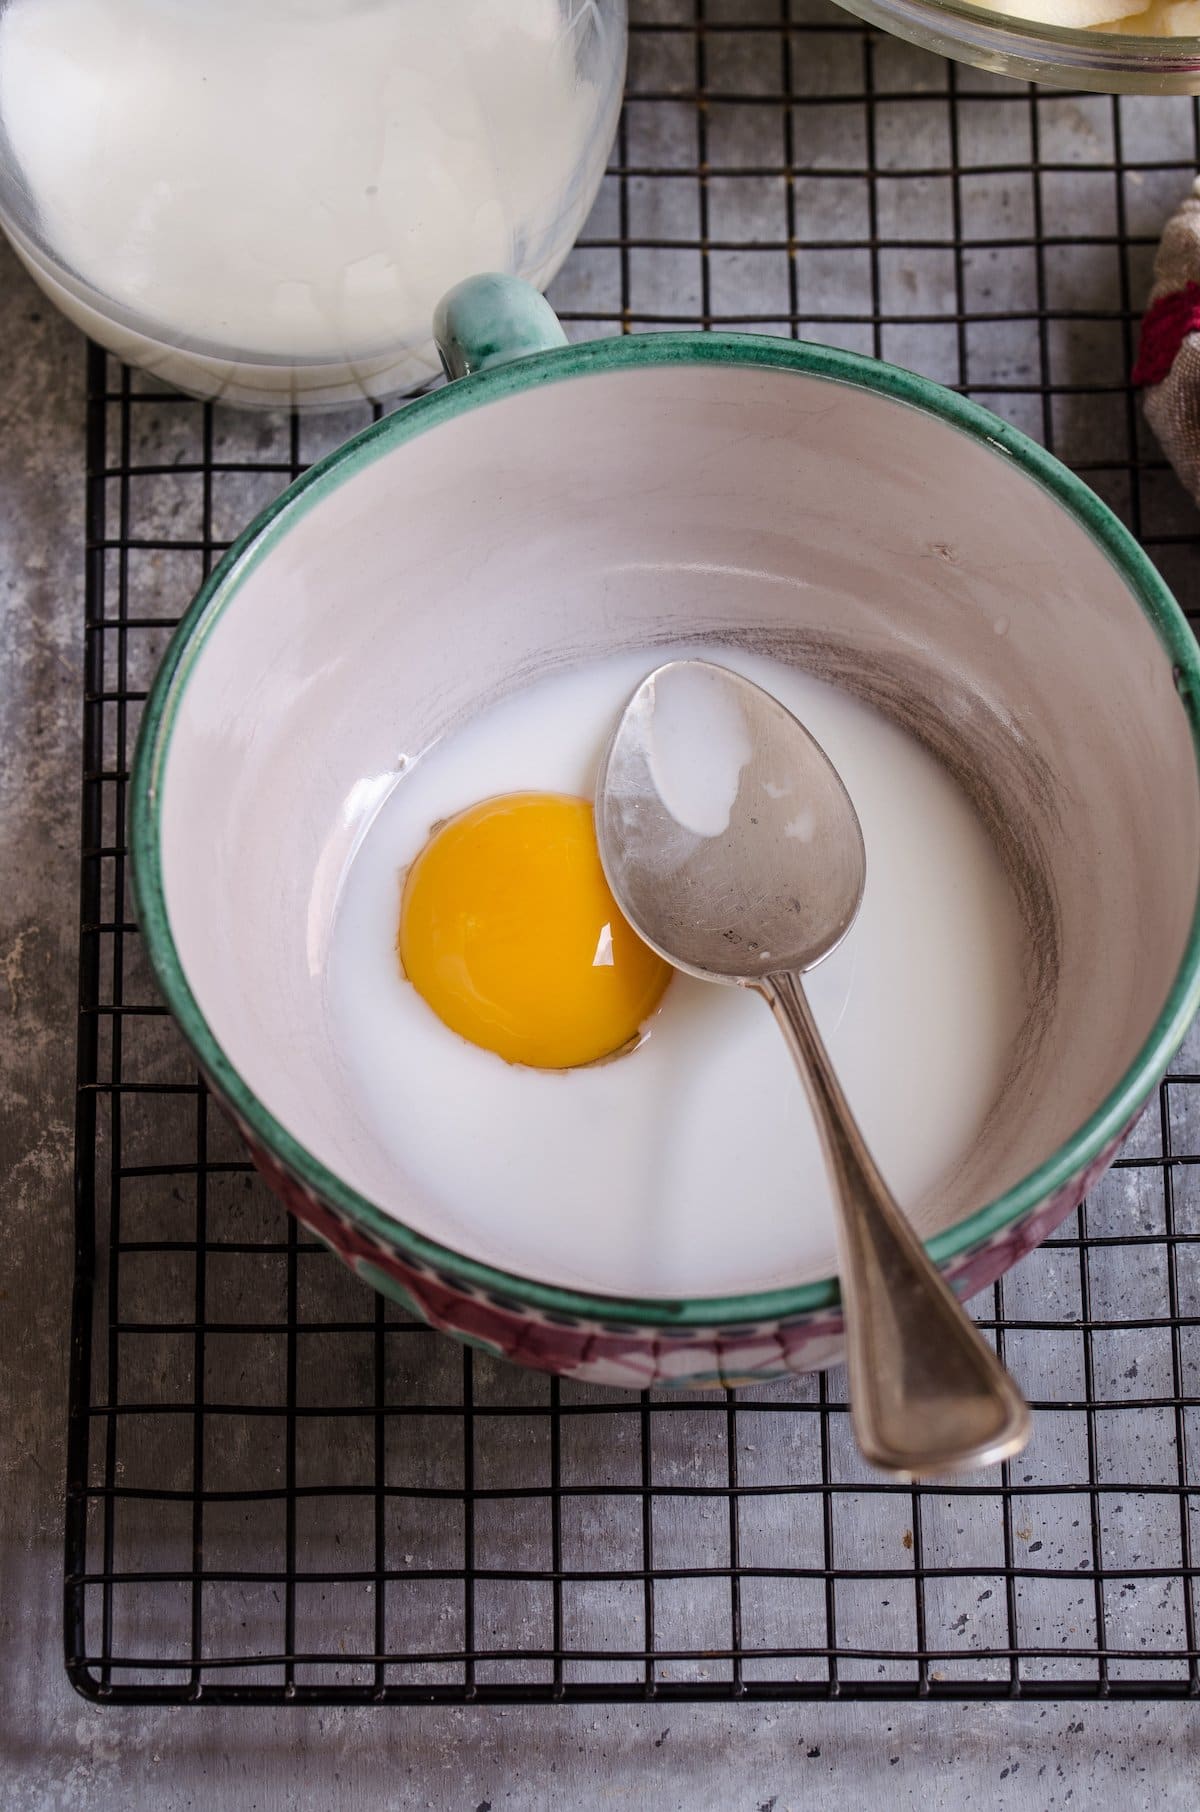 An egg yolk in a bowl.